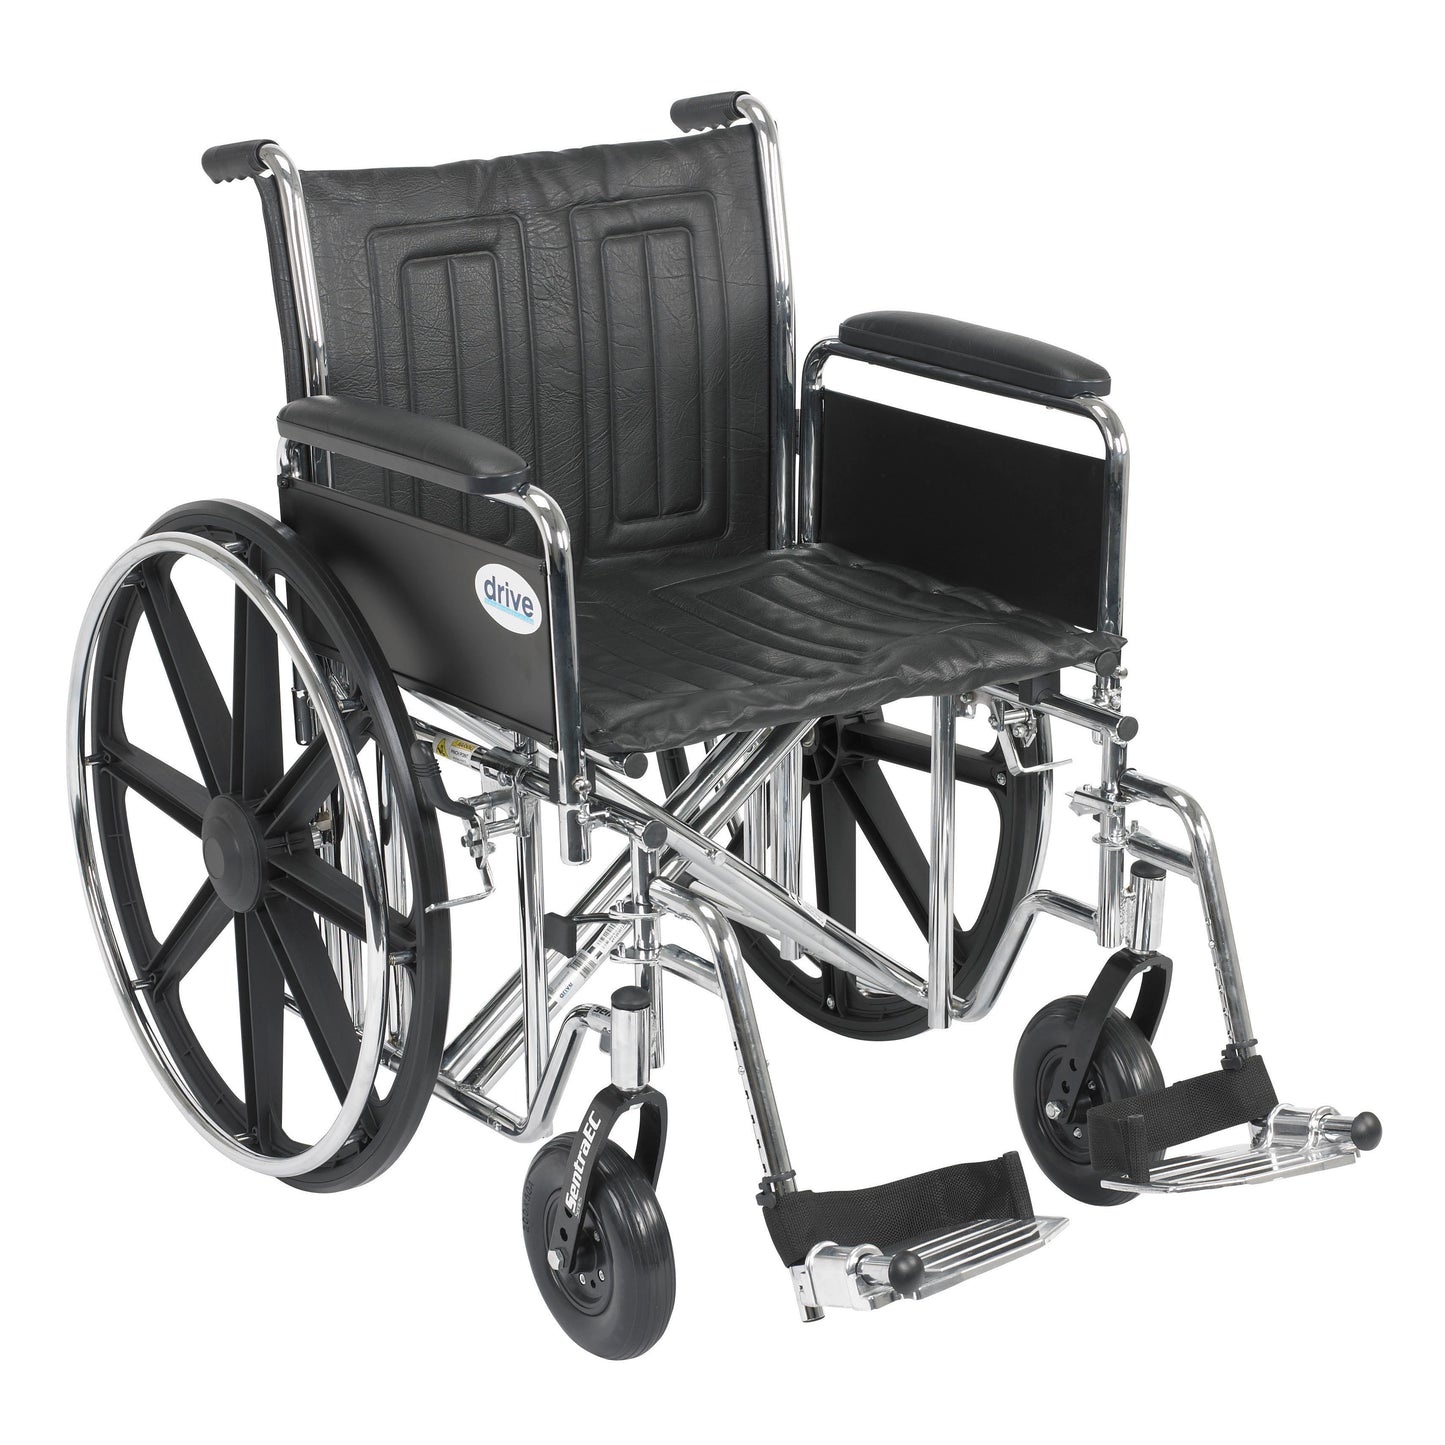 Sentra EC Heavy Duty Wheelchair, Detachable Full Arms, Swing away Footrests, 20" Seat